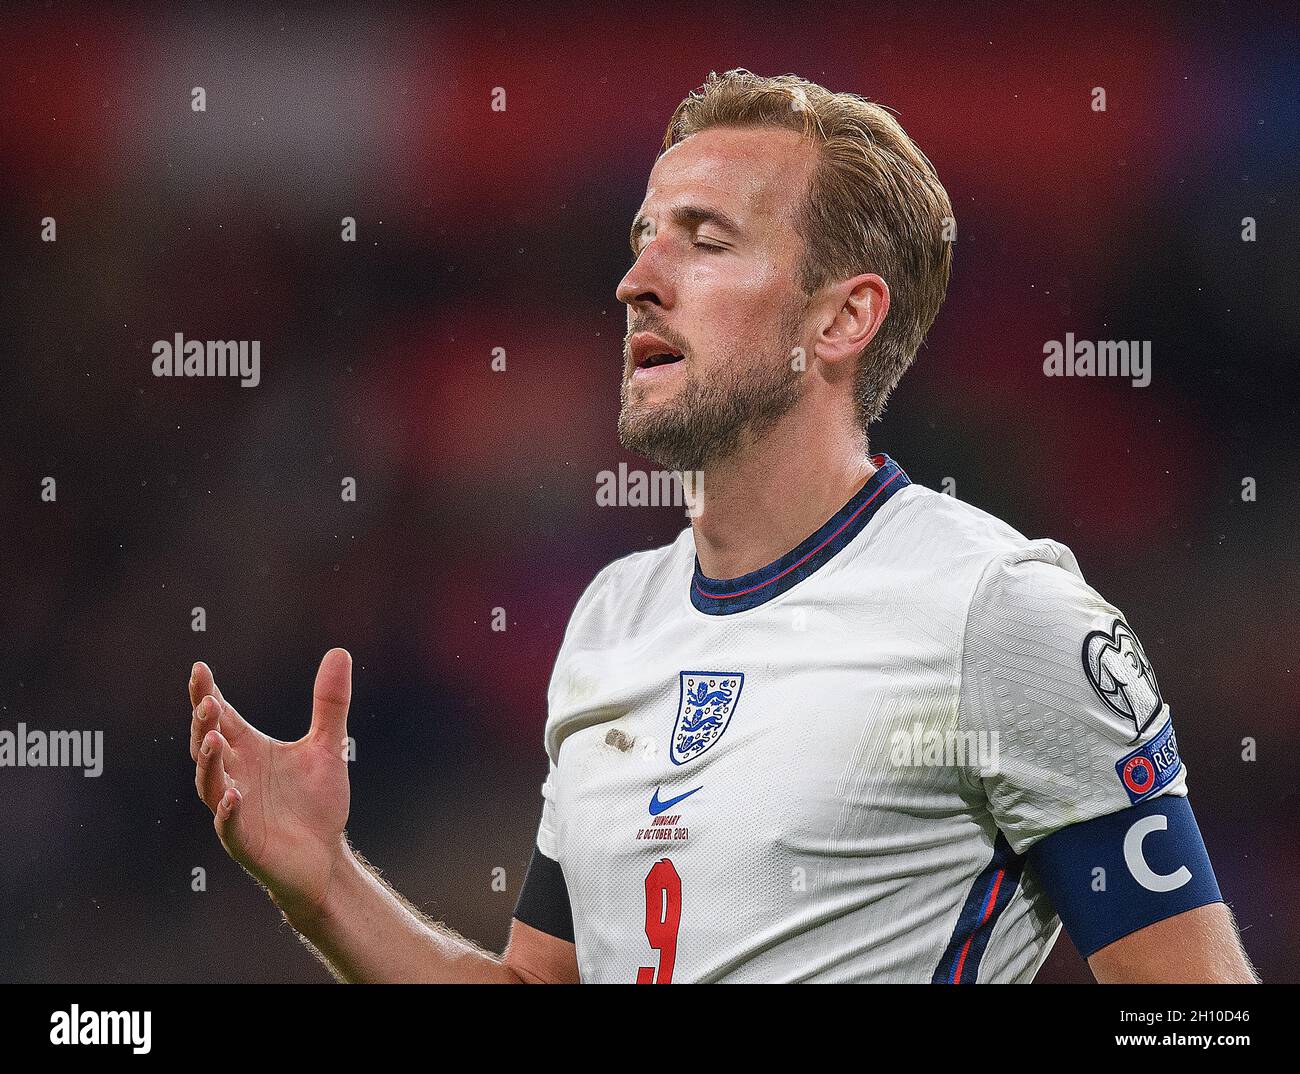 Angleterre v Hongrie - coupe du monde de la FIFA 2022 - Stade Wembley Harry Kane d'Angleterre pendant le qualificateur de coupe du monde à Wembley.Image : Mark pain Banque D'Images